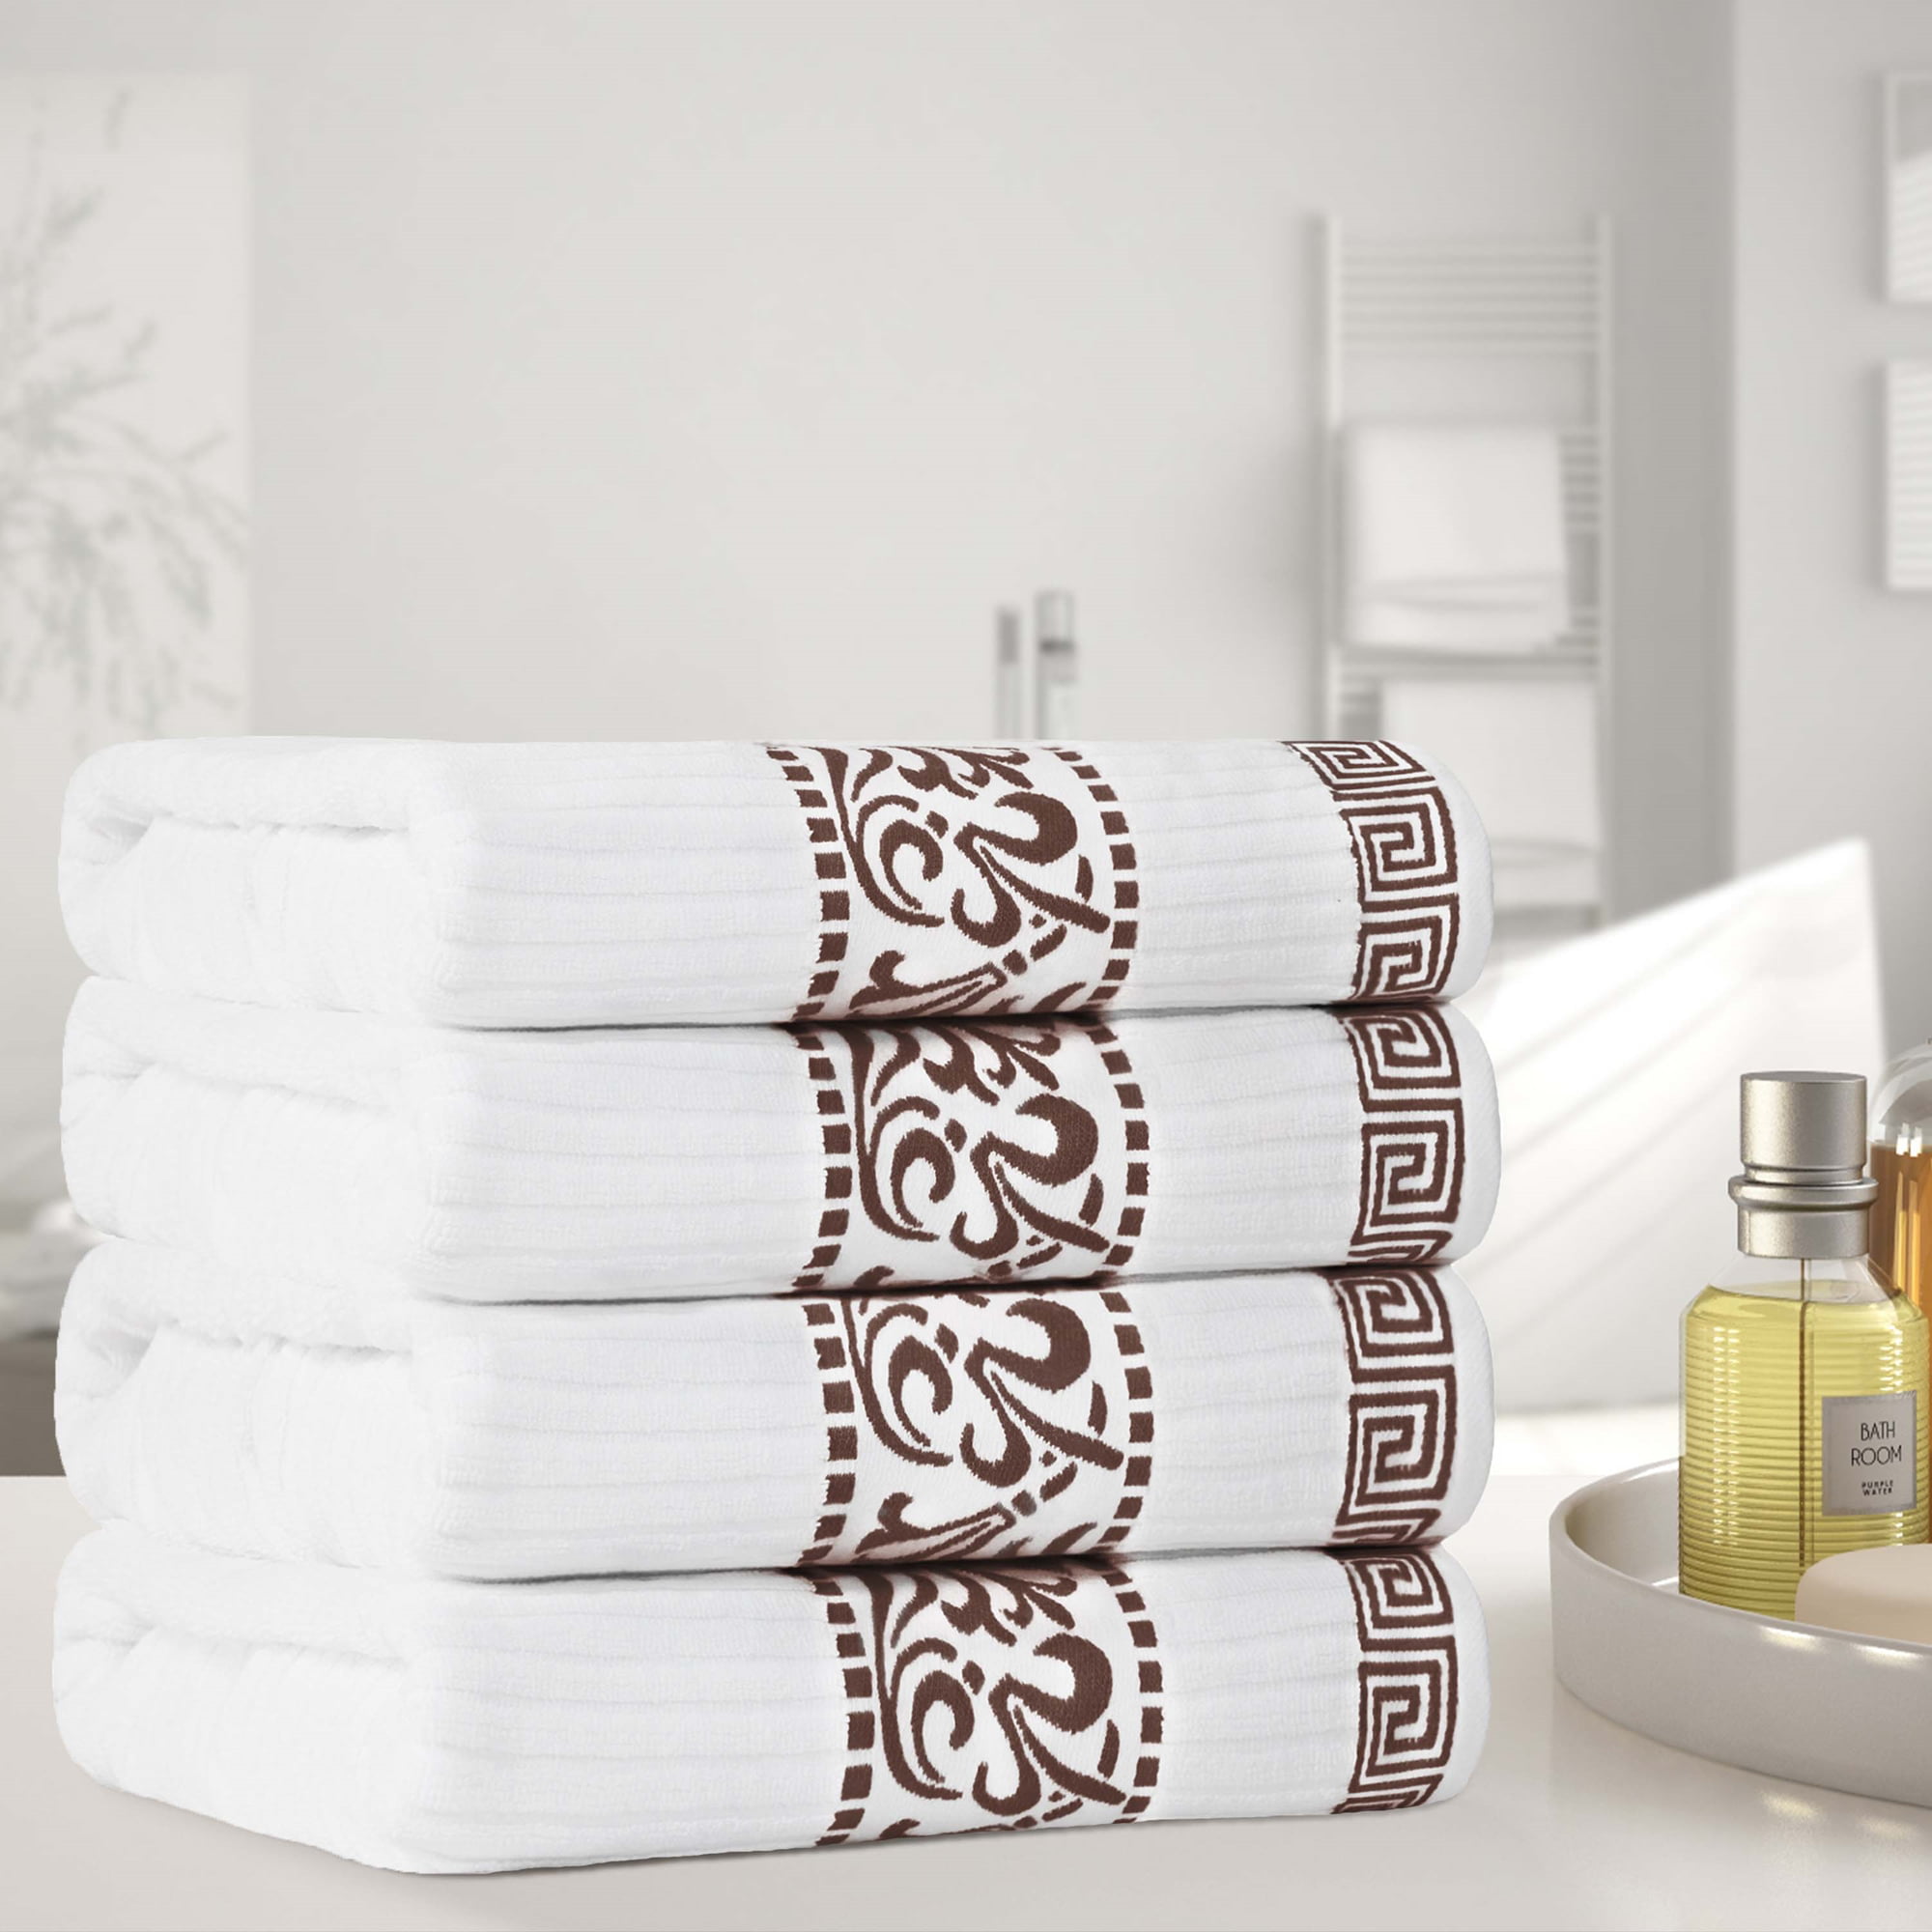 Tari 4 Piece 100% Cotton Bath Towel Set Eider & Ivory Color: Gray